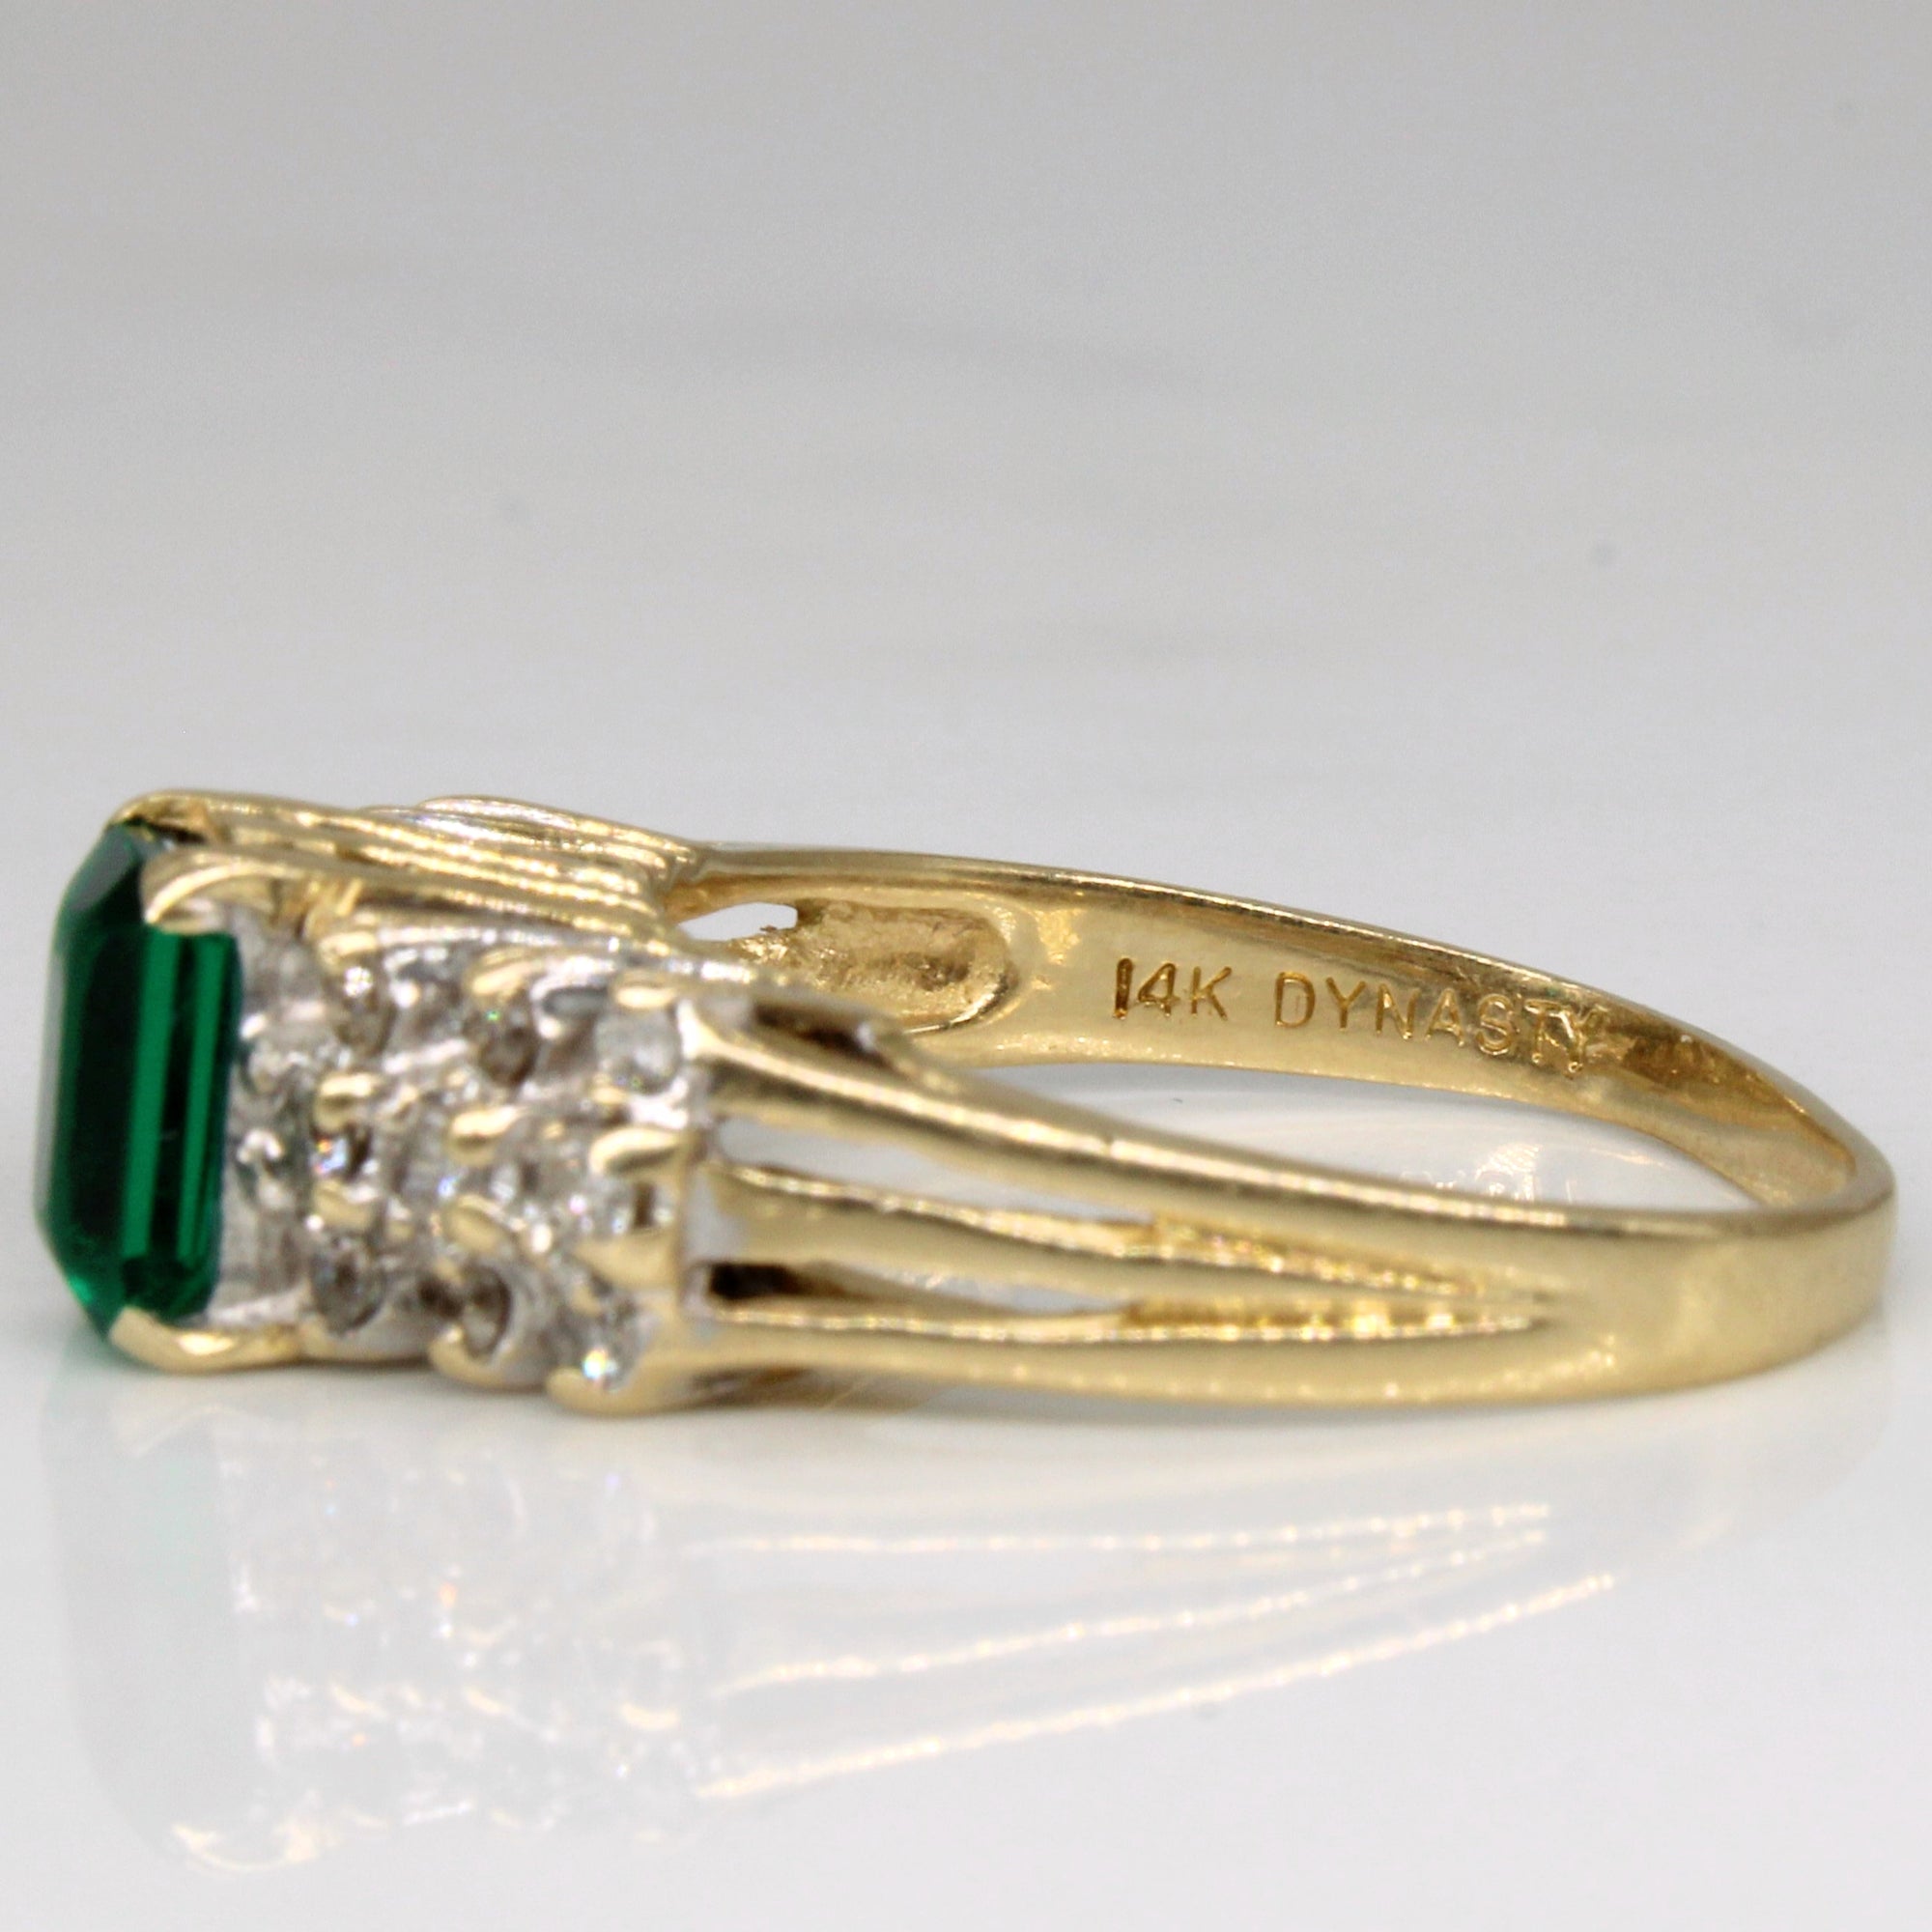 Synthetic Emerald & Diamond Ring | 0.90ct, 0.21ctw | SZ 7.75 |